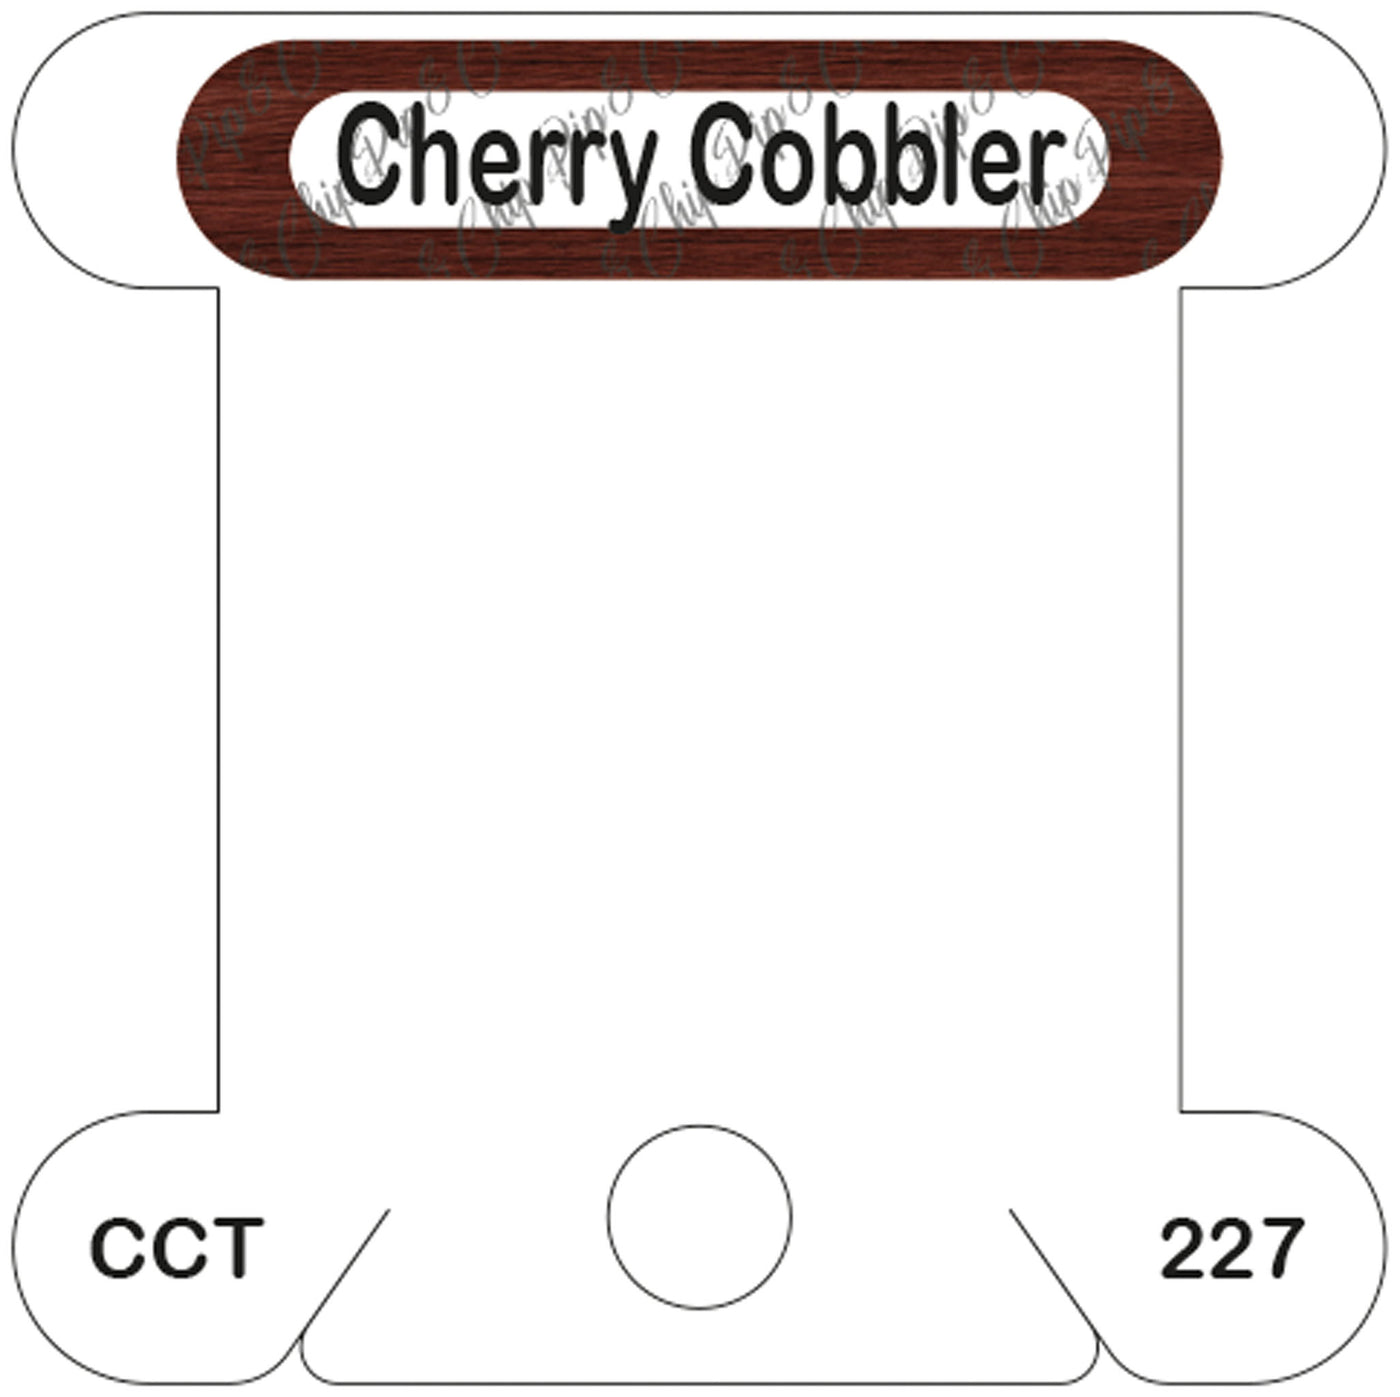 Classic Colorworks Cherry Cobbler acrylic bobbin